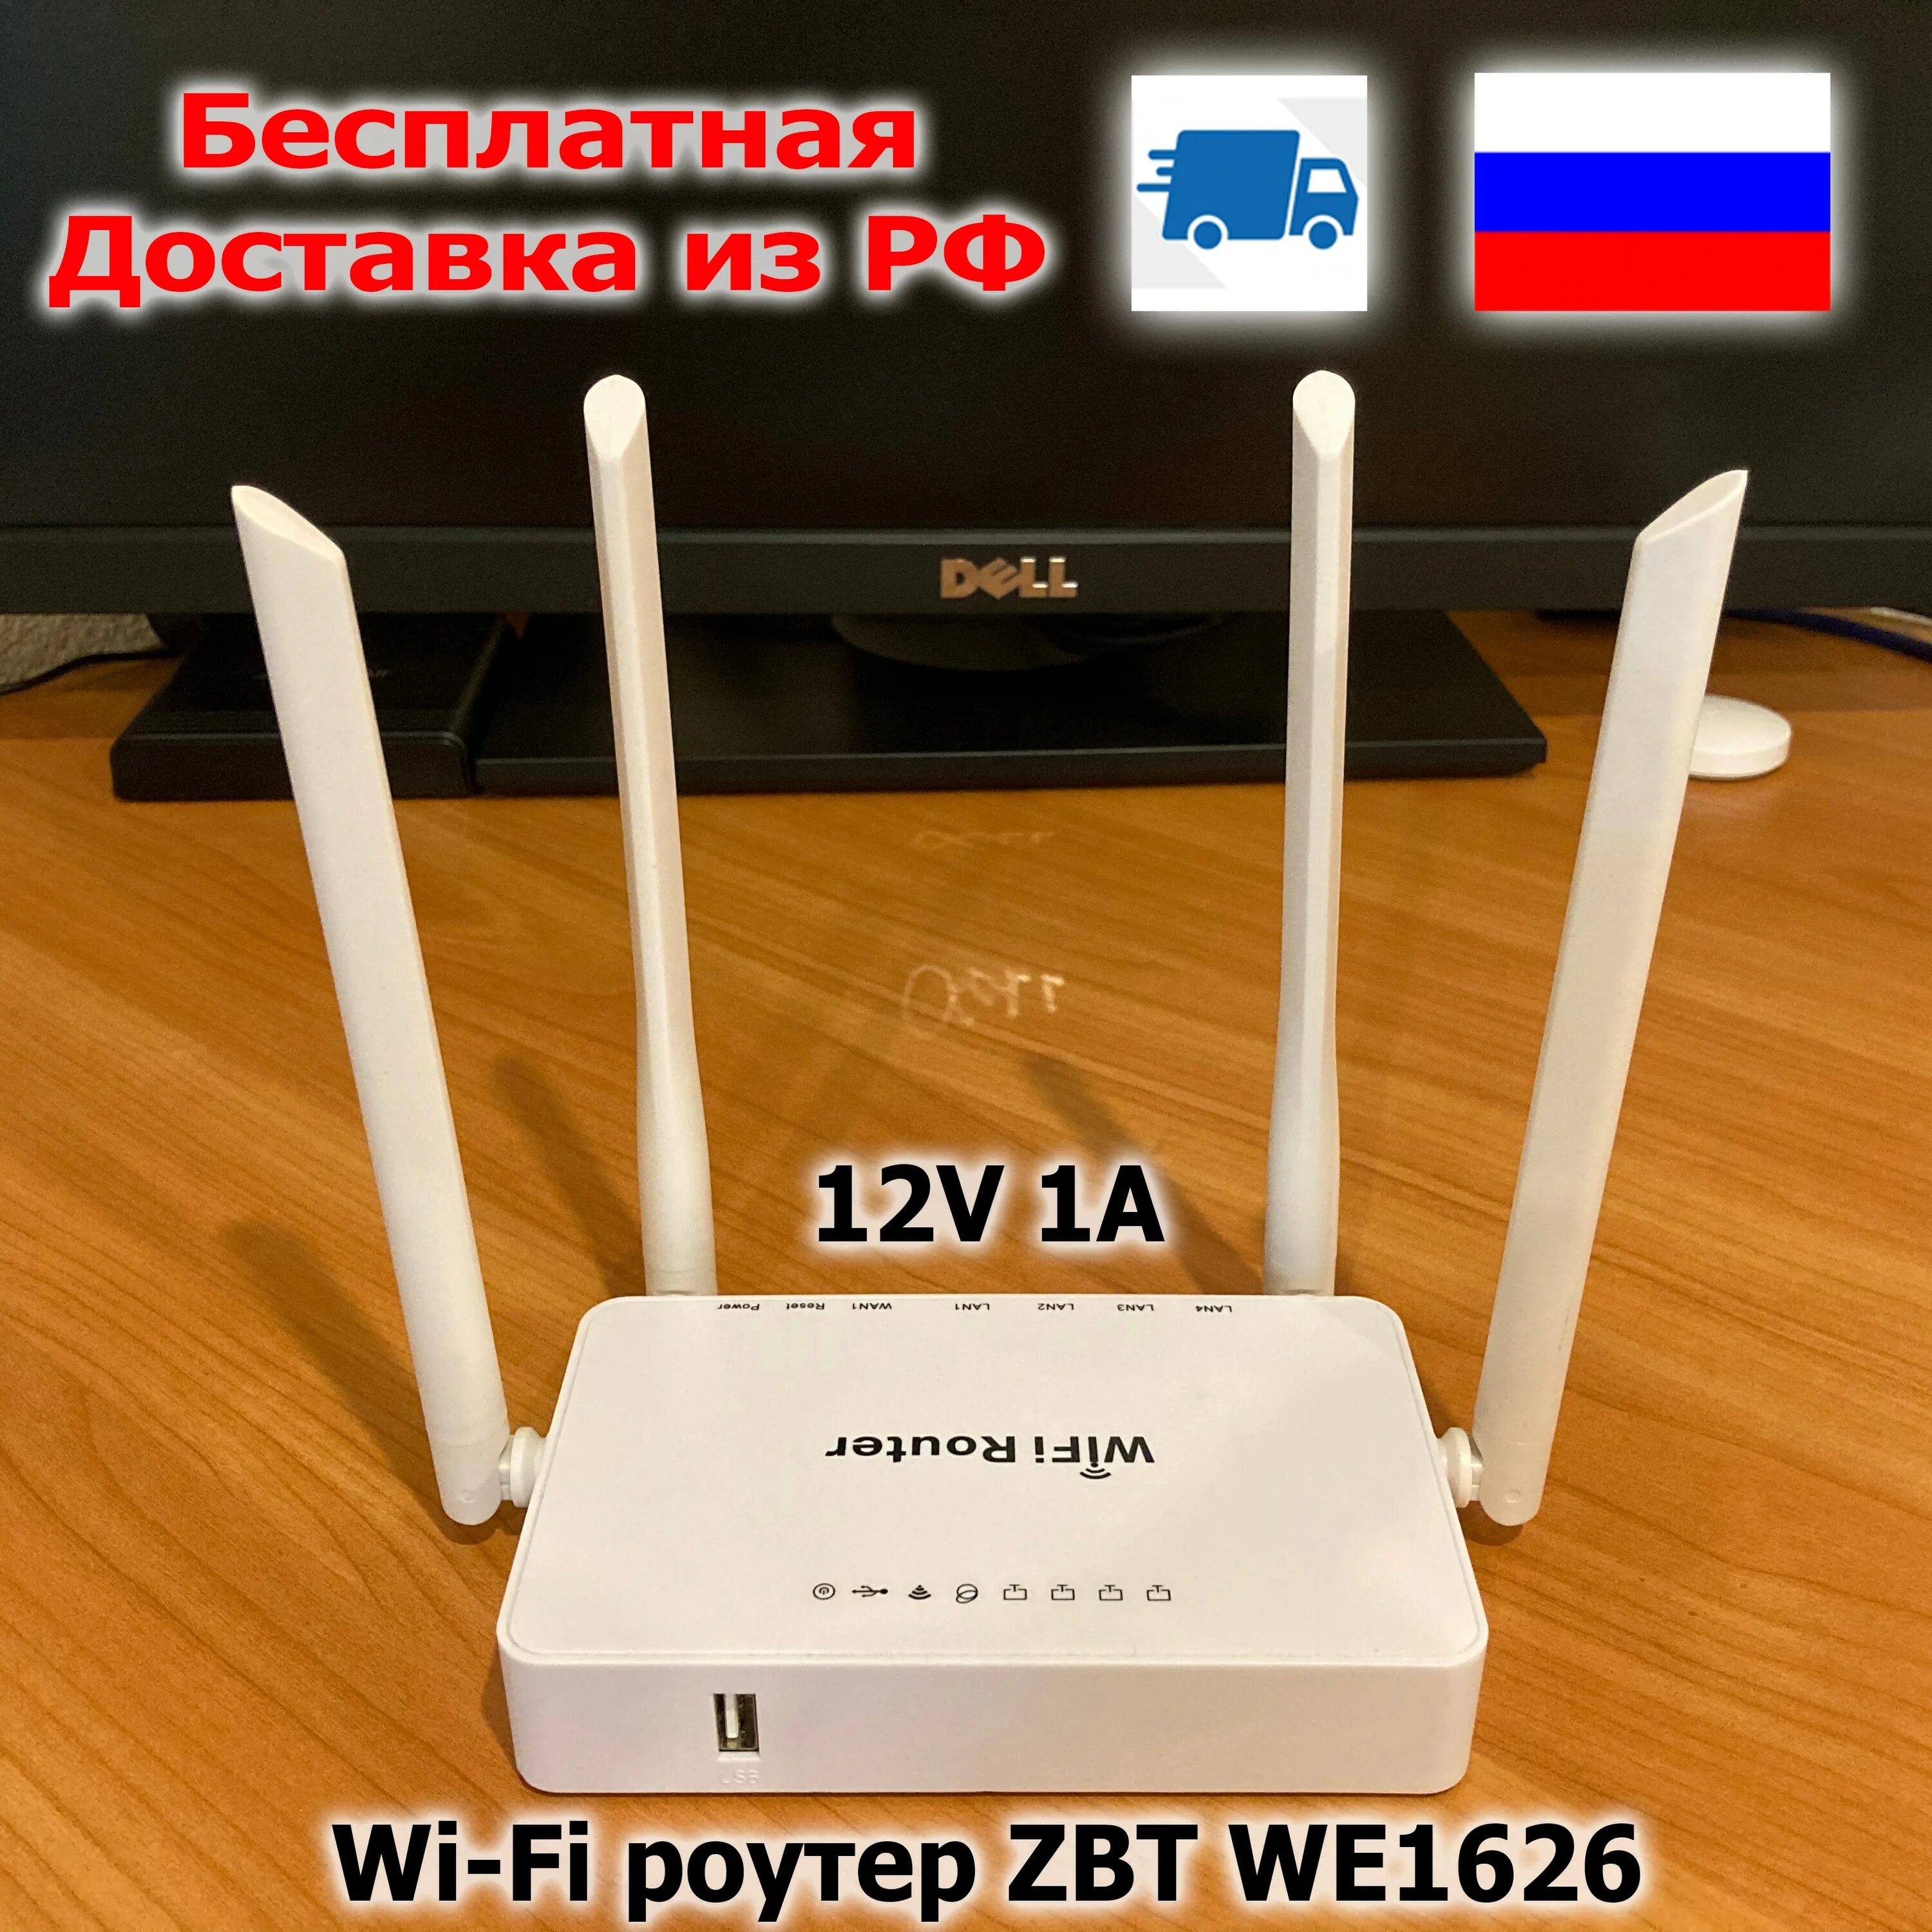 Роутер zbt we1626. Wi-Fi роутер ZBT we1626. WIFI роутер ZBT we 1626. Роутер WIFI 3g | 4g ZBT we1626. Роутер WIFI we1626 для модемов 3g 4g ZBT.